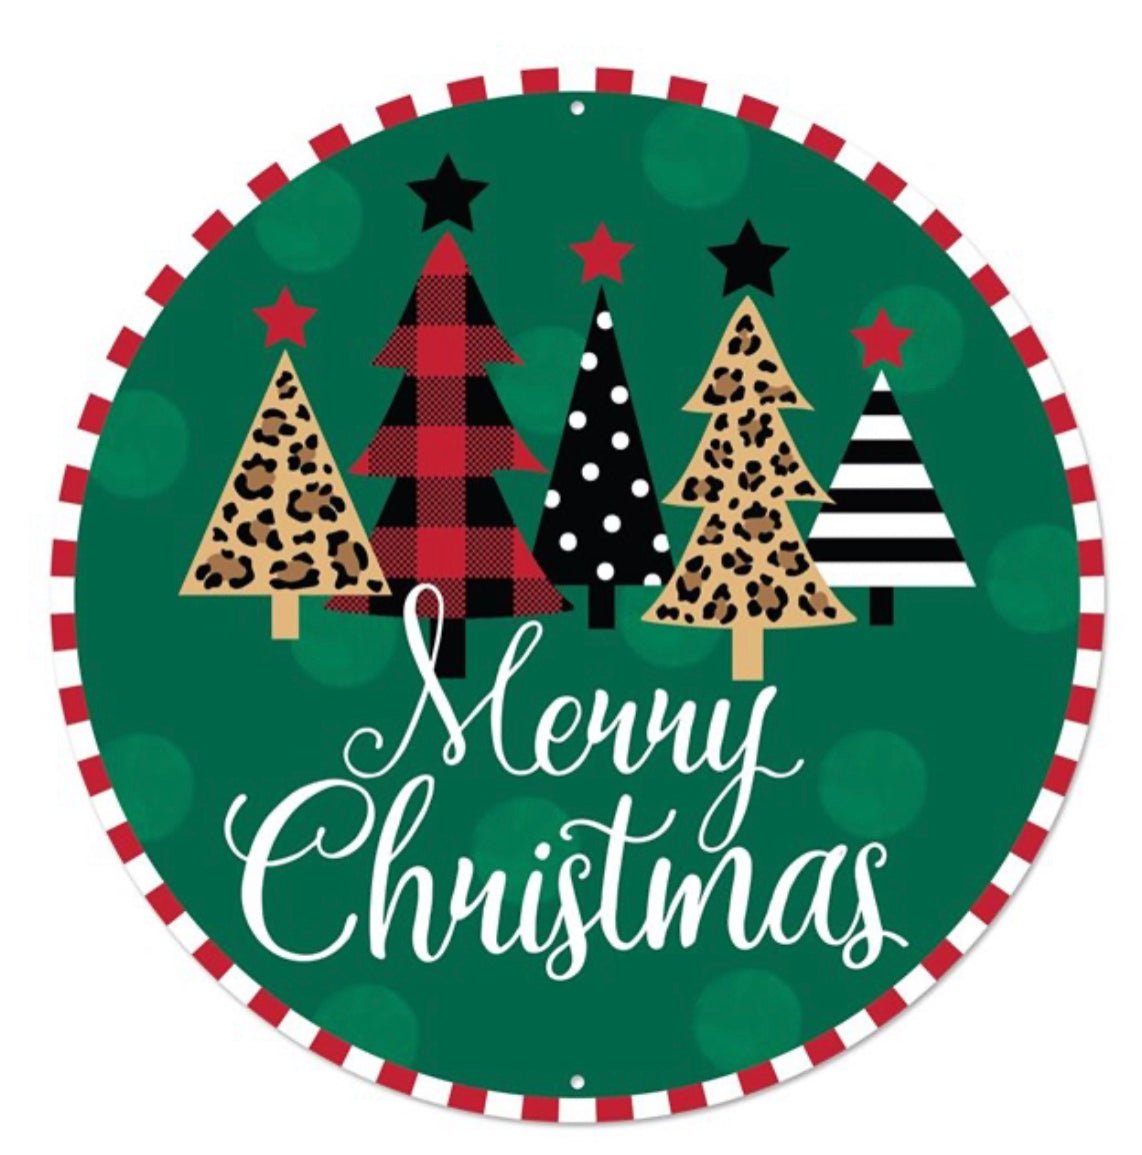 Merry Christmas Tree metal round sign - Greenery MarketSeasonal & Holiday DecorationsMD0745